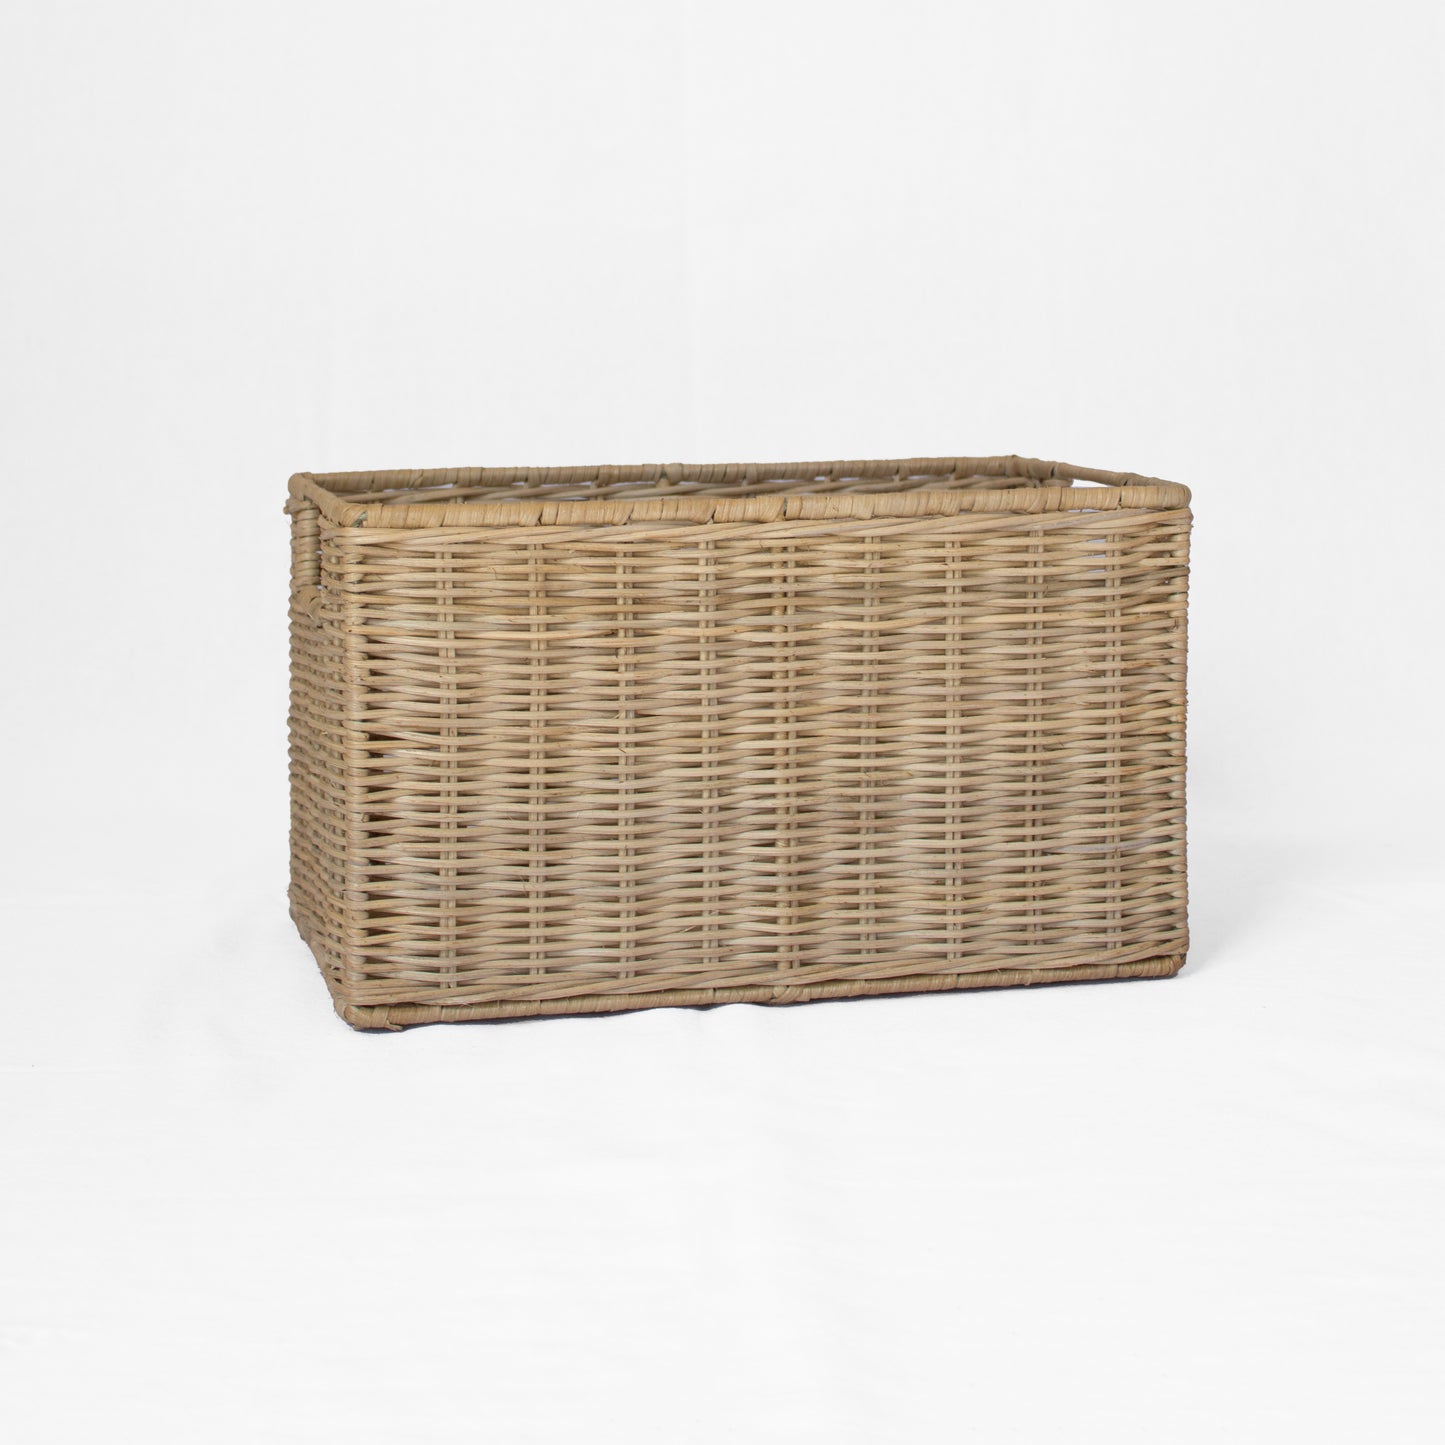 Willow Rattan Rectangle Storage Basket